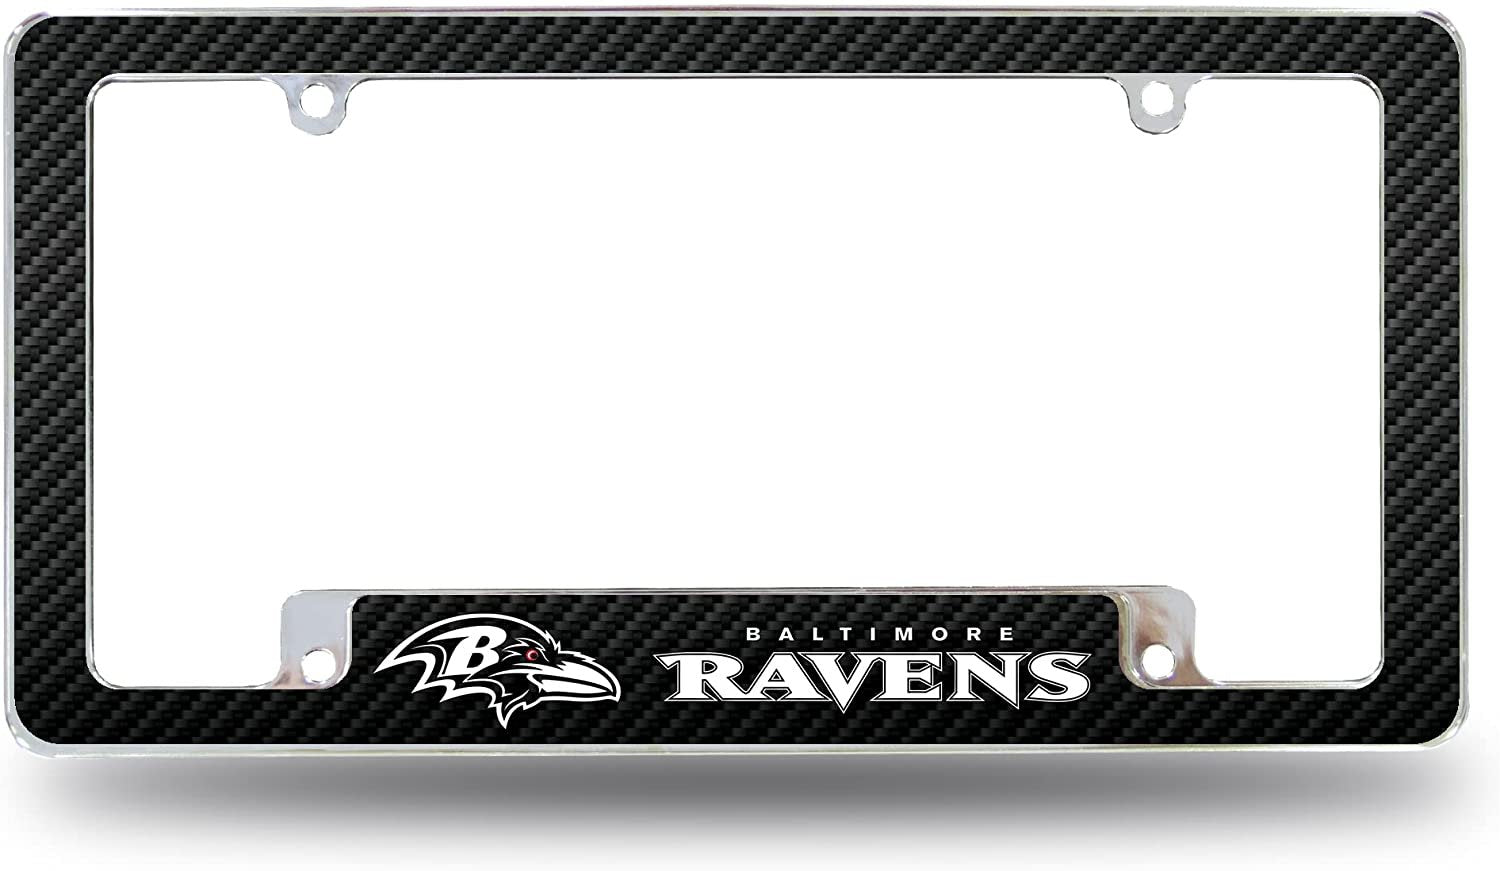 Baltimore Ravens Metal License Plate Frame Tag Cover Carbon Fiber Design 12x6 Inch